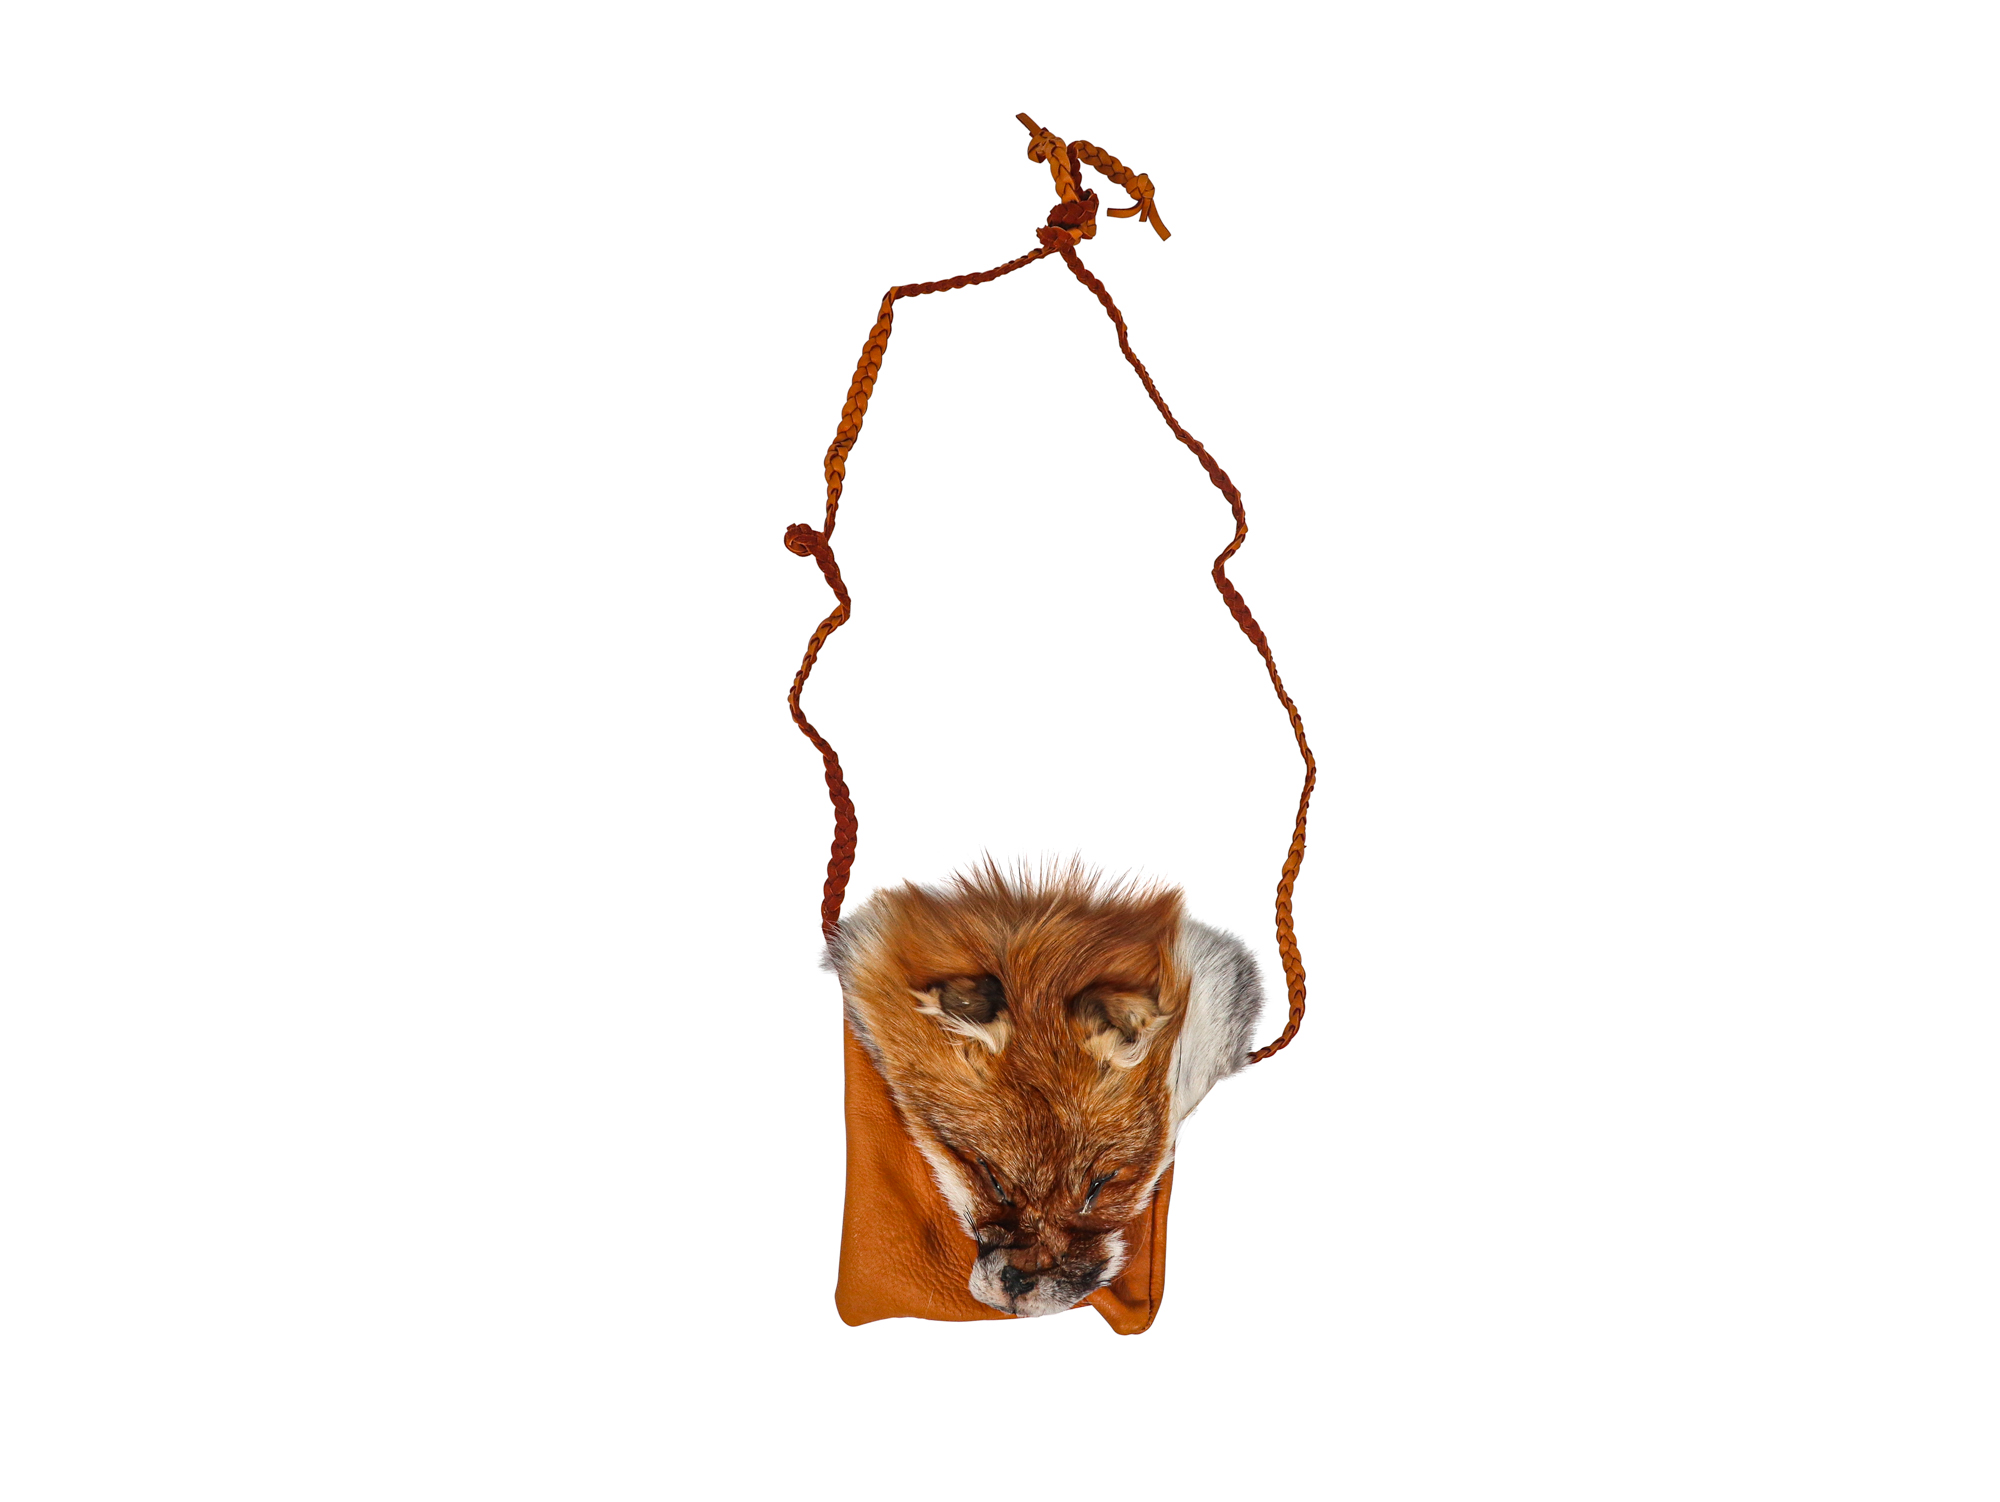 Red Fox Face Bag: Gallery Item fox face bags